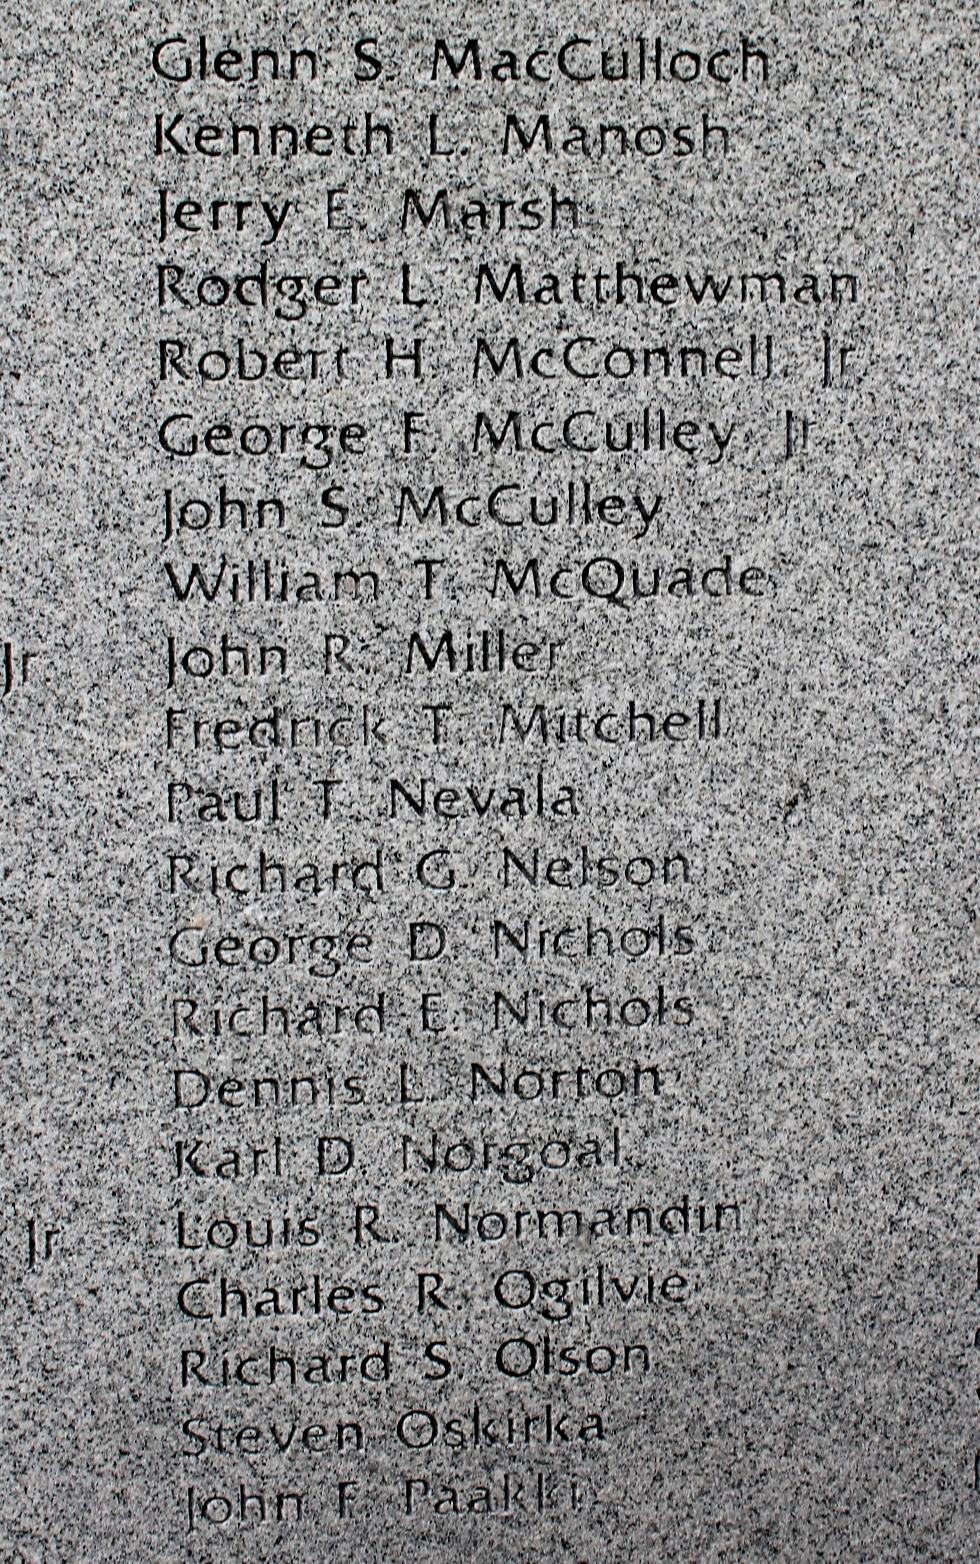 Stowe Massachusetts Vietnam War Veterans Memorial